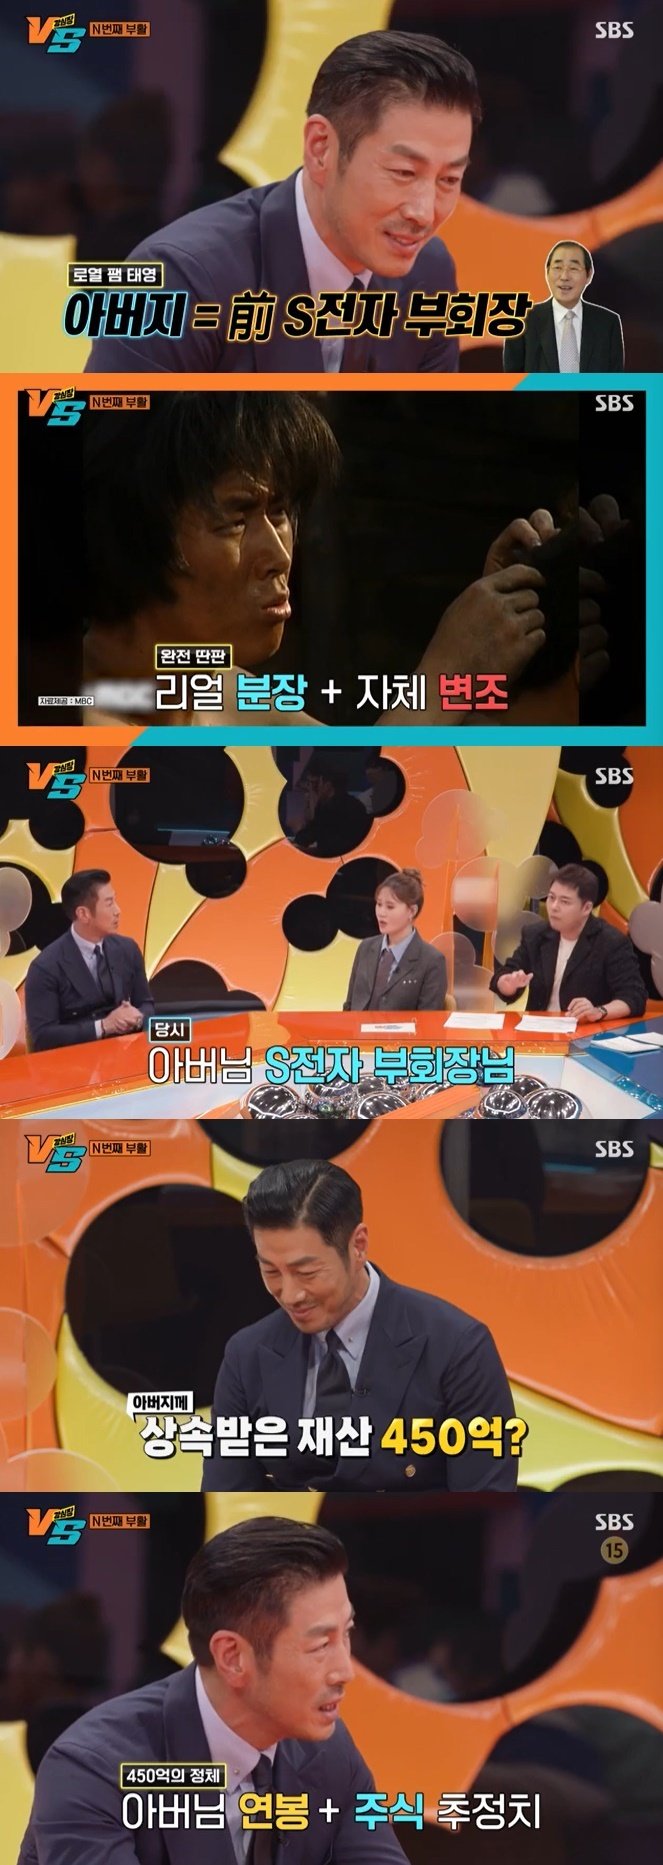 SBS ‘강심장VS’ 캡처